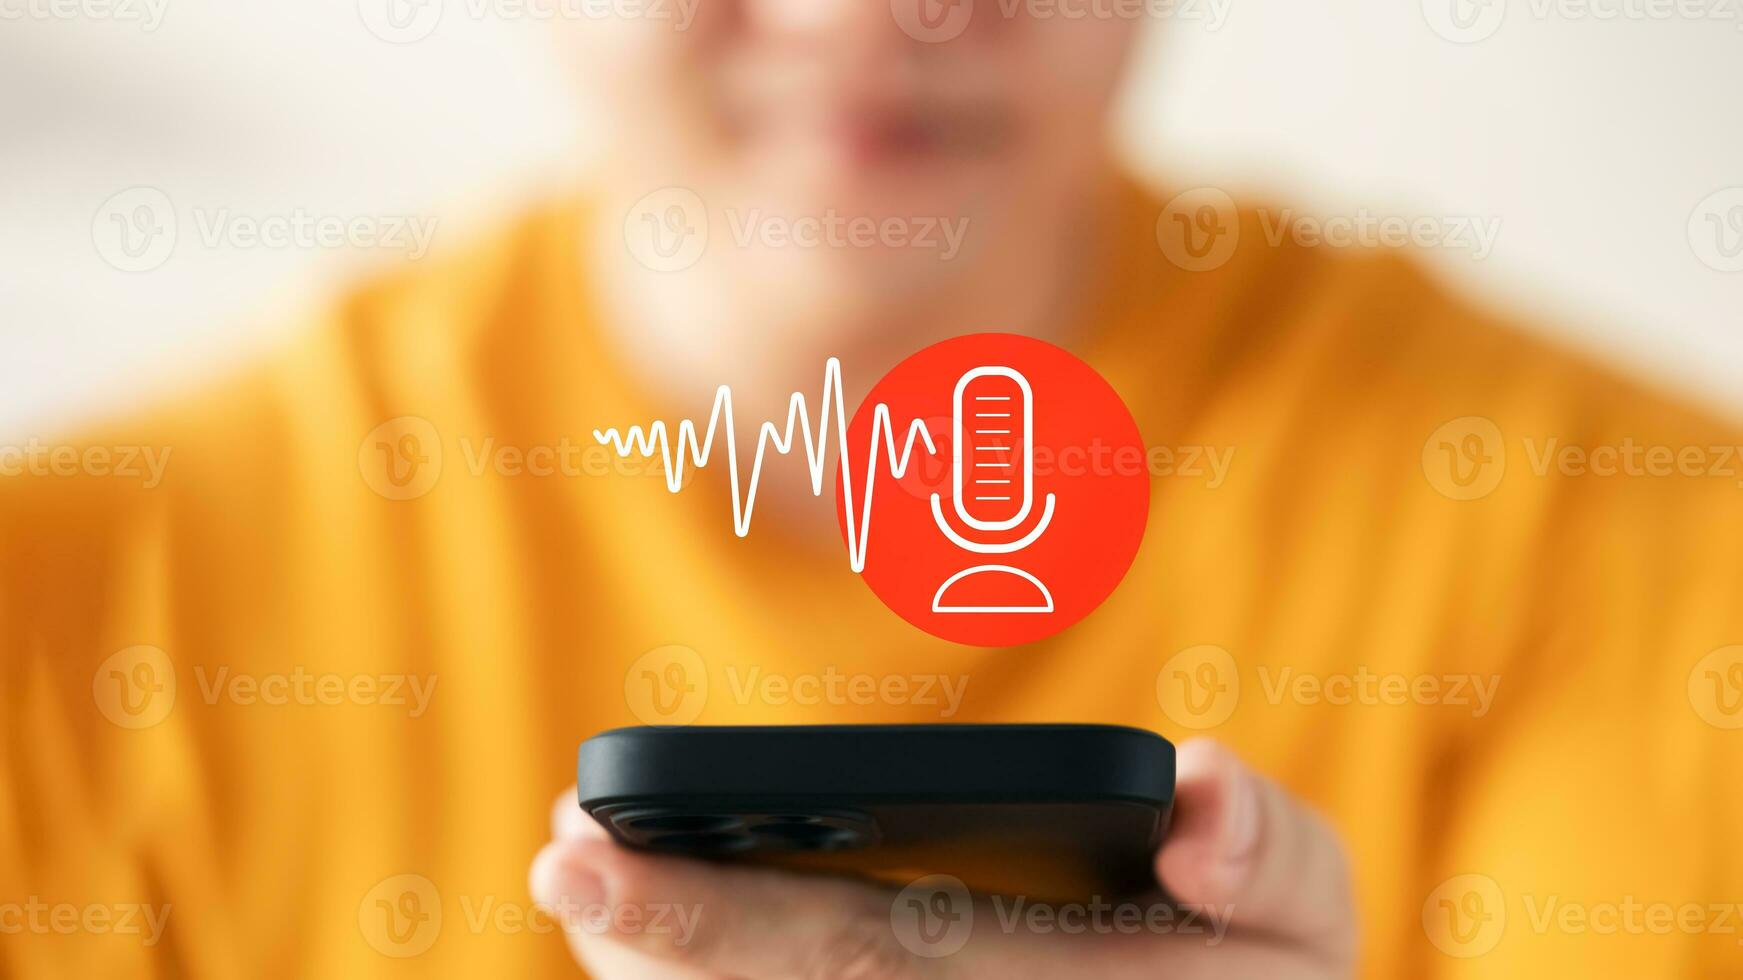 moderno voz grabación, mano participación micrófono icono en teléfono inteligente capturar sonido, música, y voz mensajes con esta voz grabación aplicación utilizar ai activado Internet buscar para fácil acceso a información foto